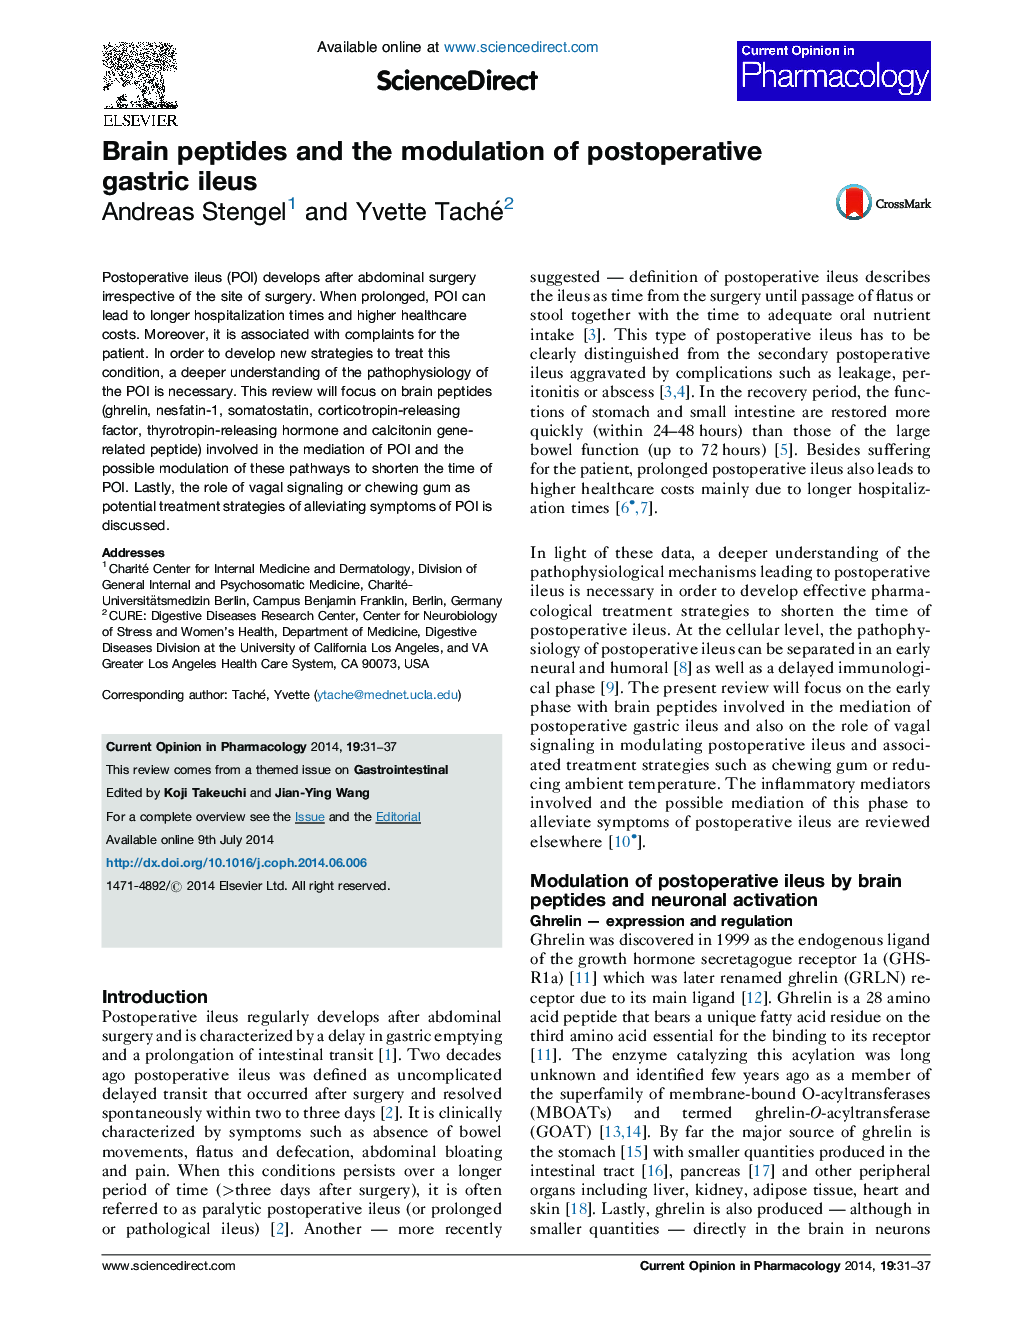 Brain peptides and the modulation of postoperative gastric ileus